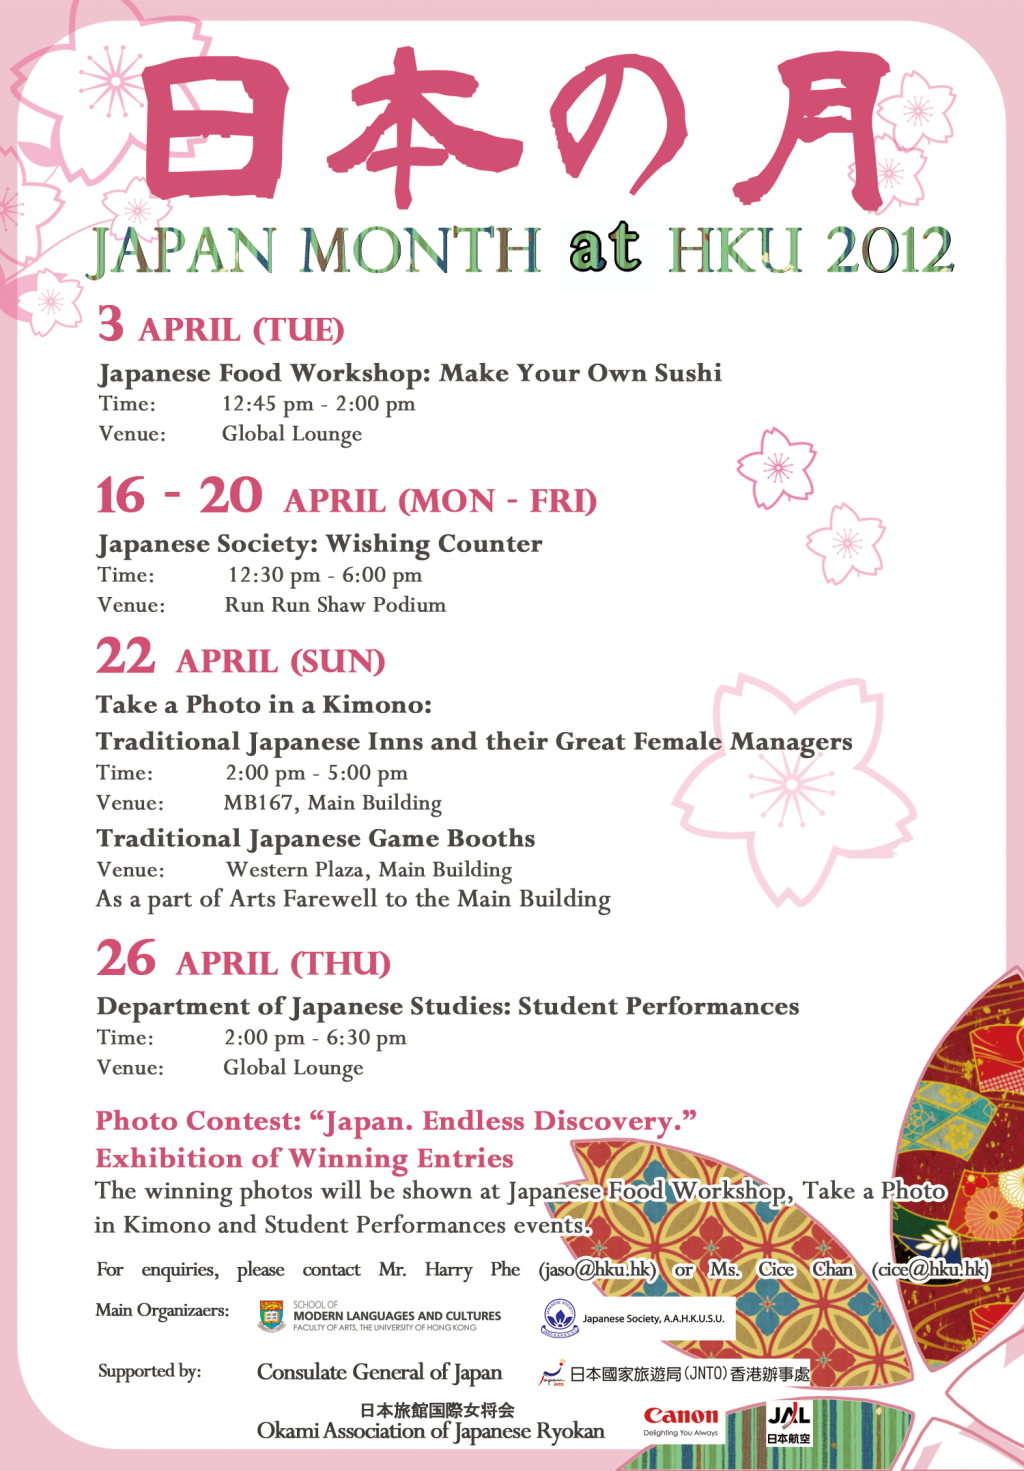 Japan Month at HKU 2012